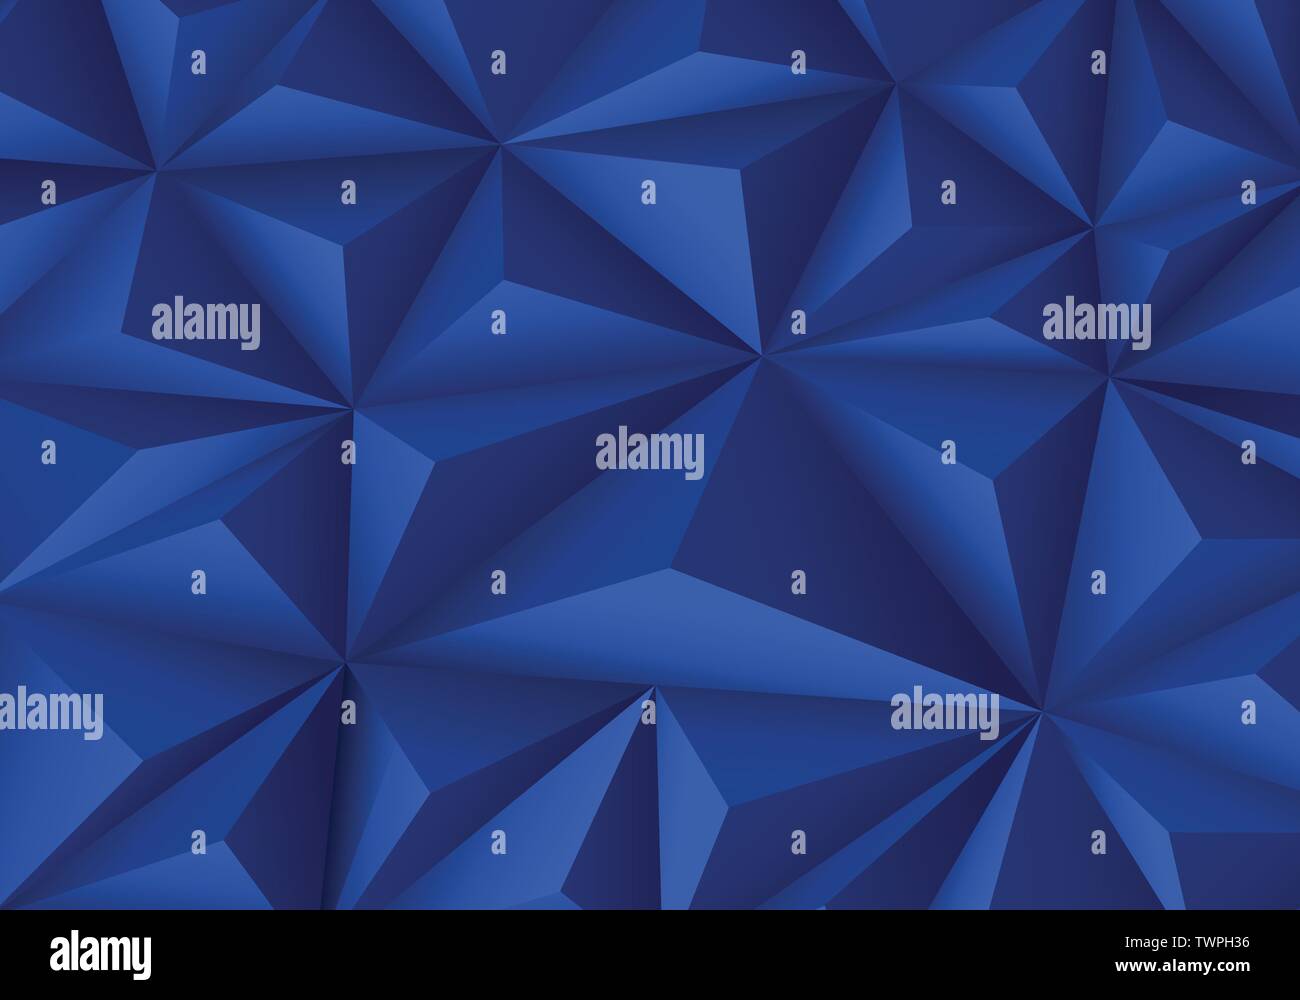 Abstrakte blaue Dreieck Polygon Muster Luxus Hintergrund Vektor Illustration. Stock Vektor